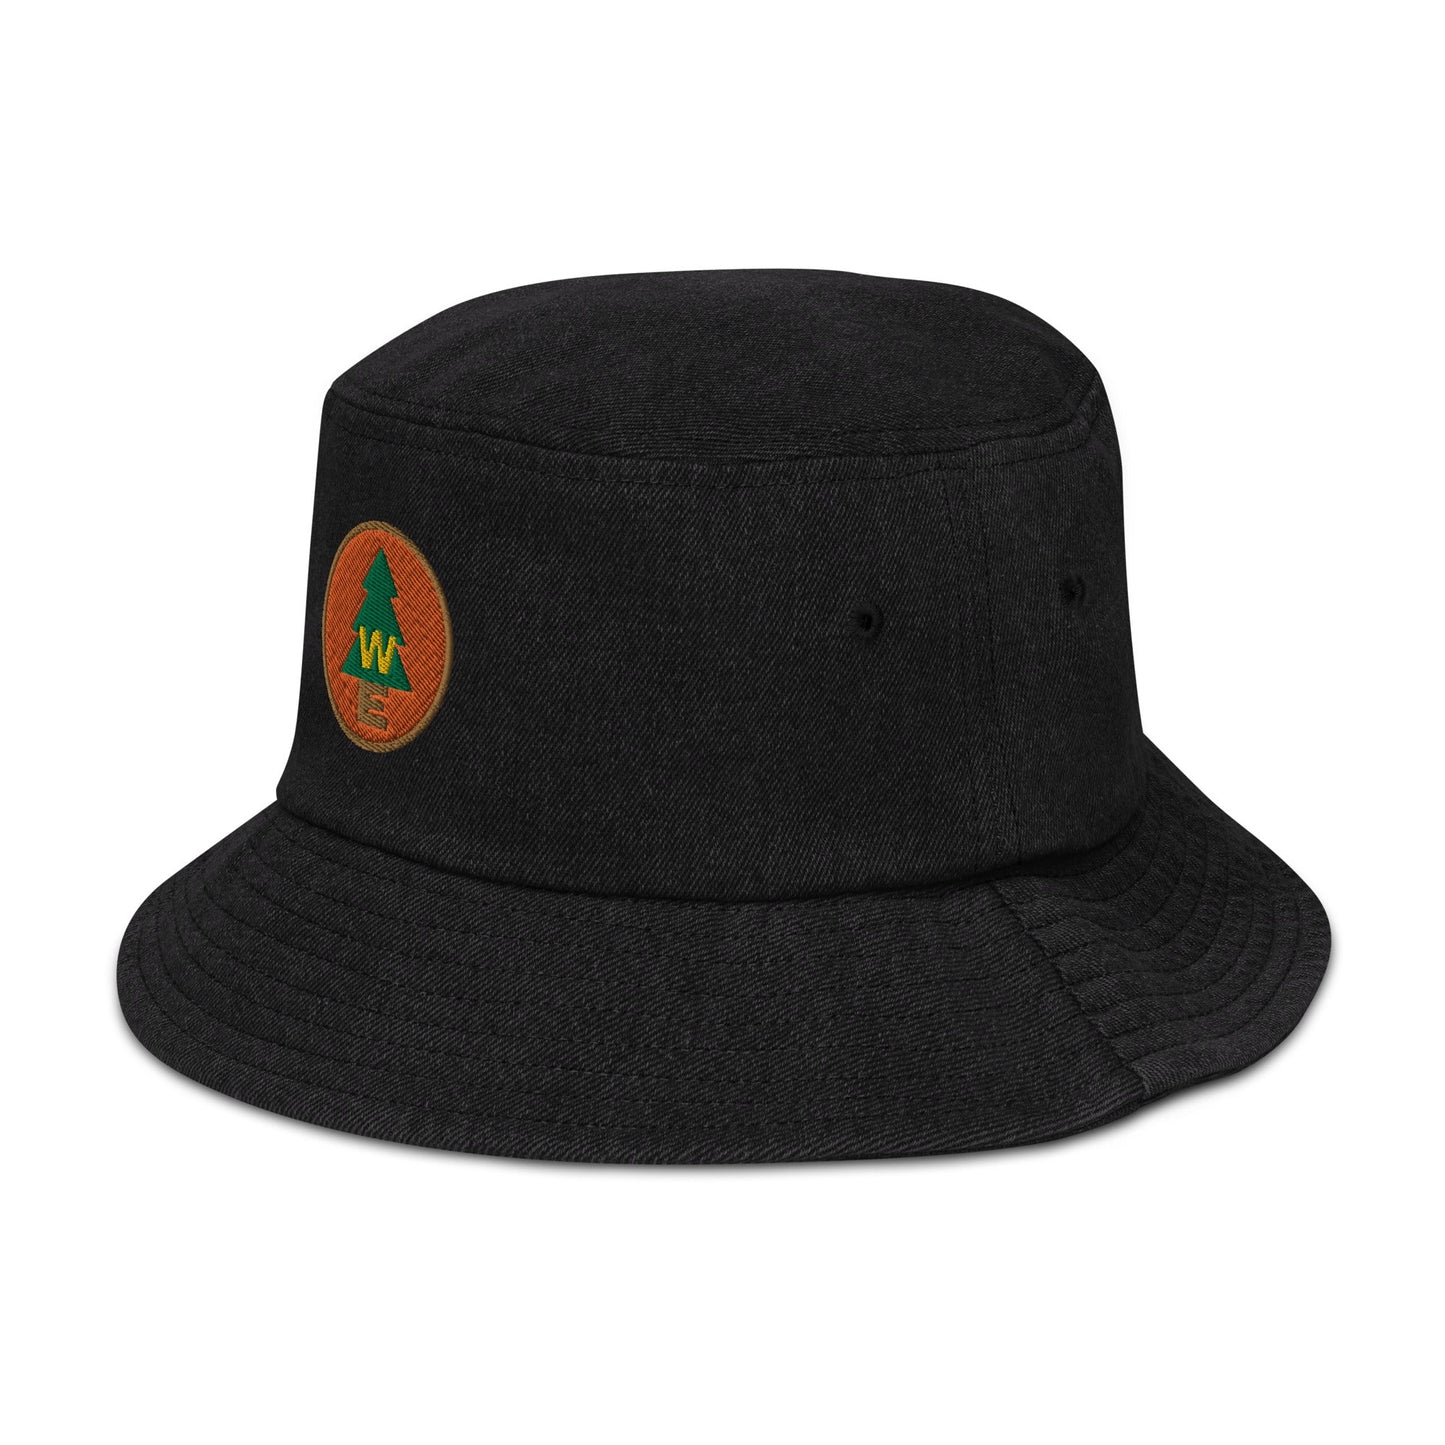 The Wilderness must be Explored Denim bucket hat 100 years of wonderadult disneyHatWrong Lever Clothing